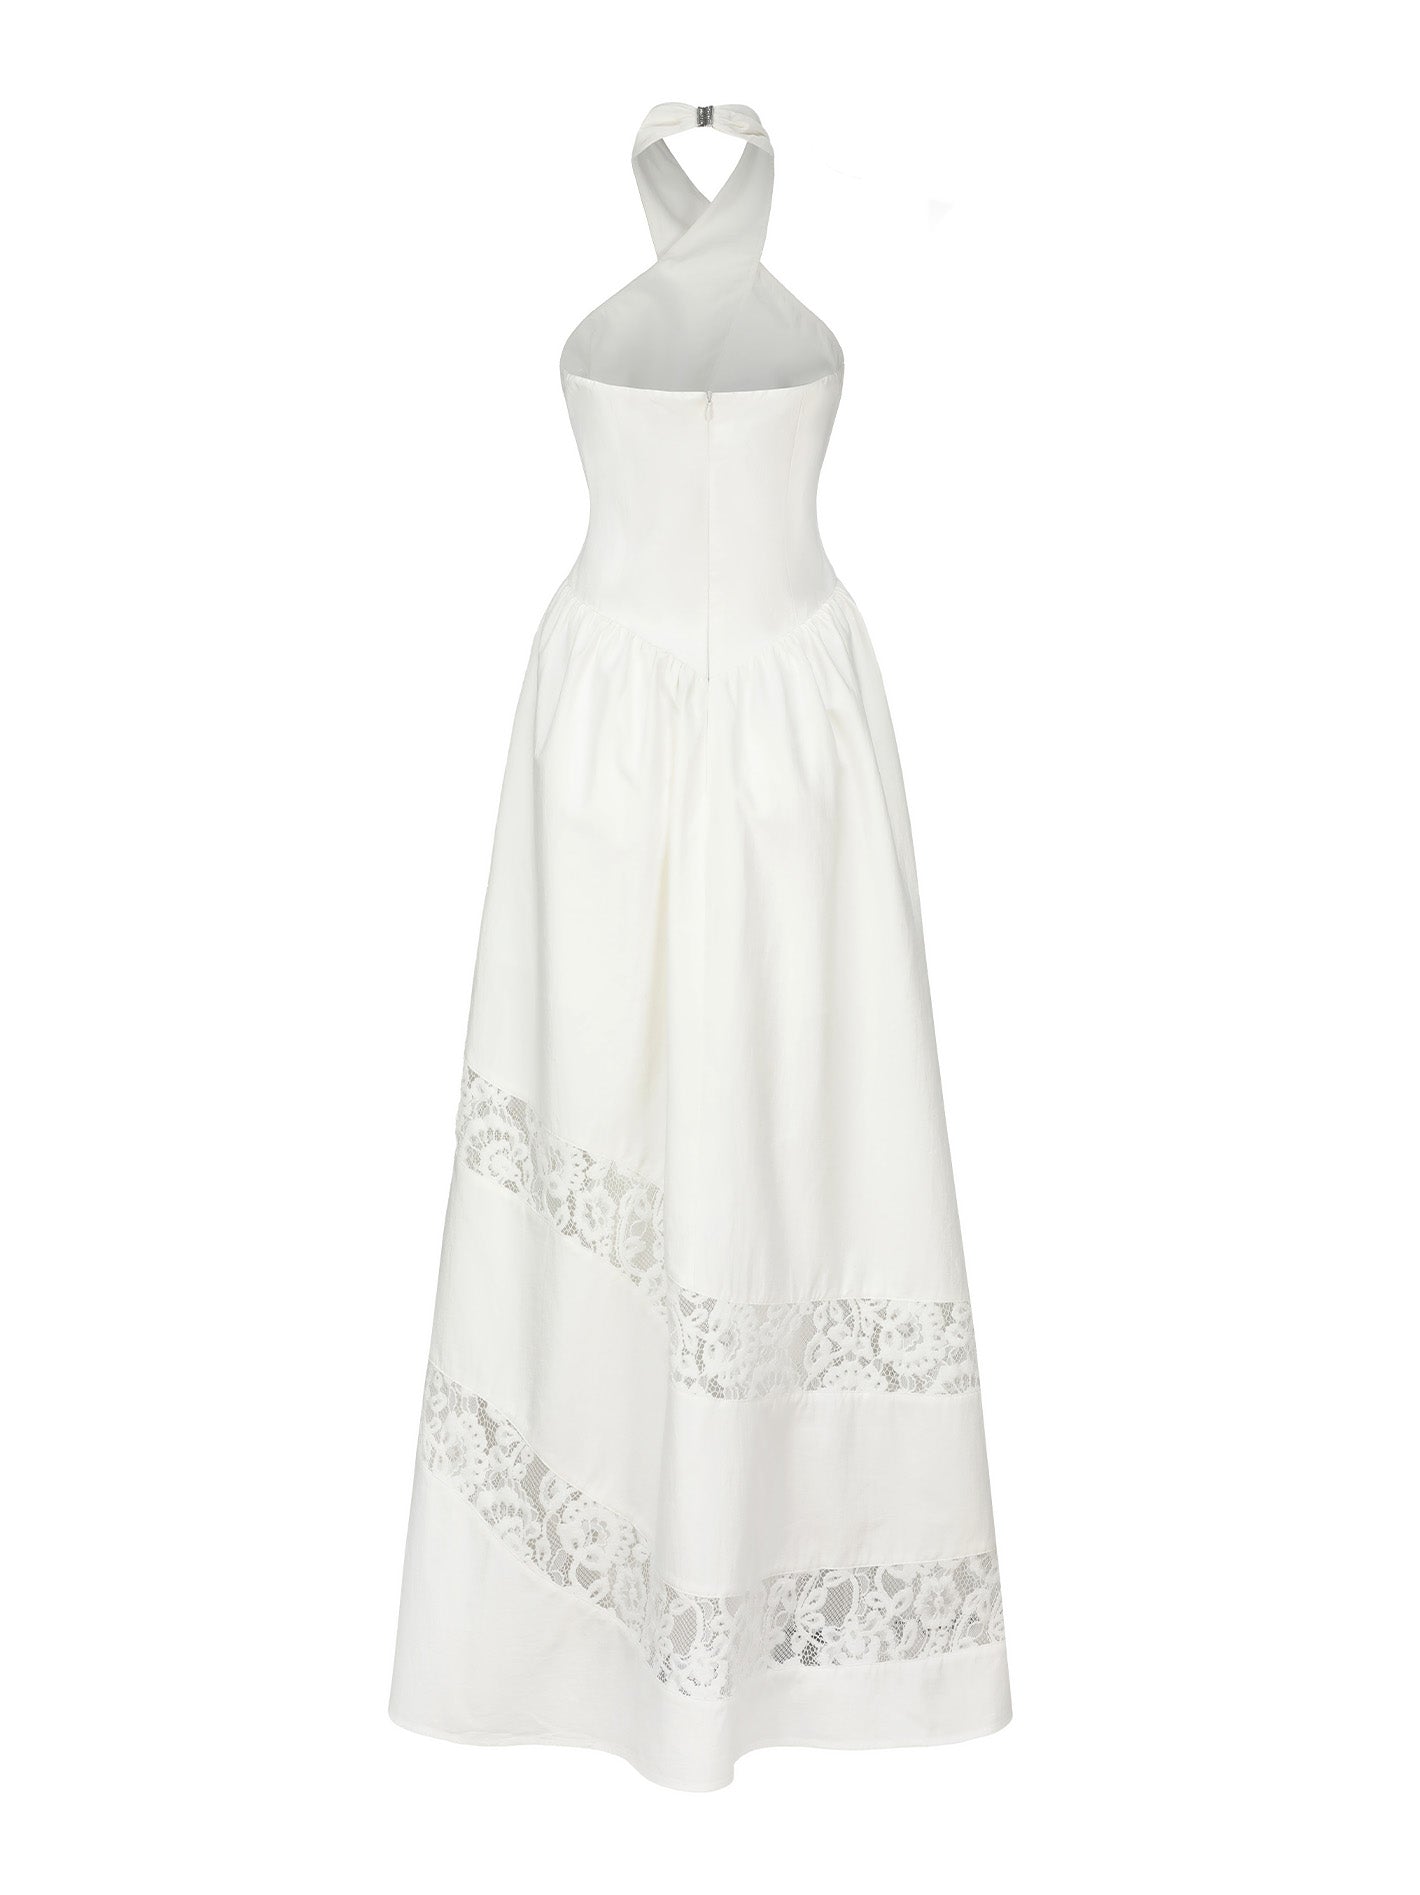 Portia Lace Dress (White)